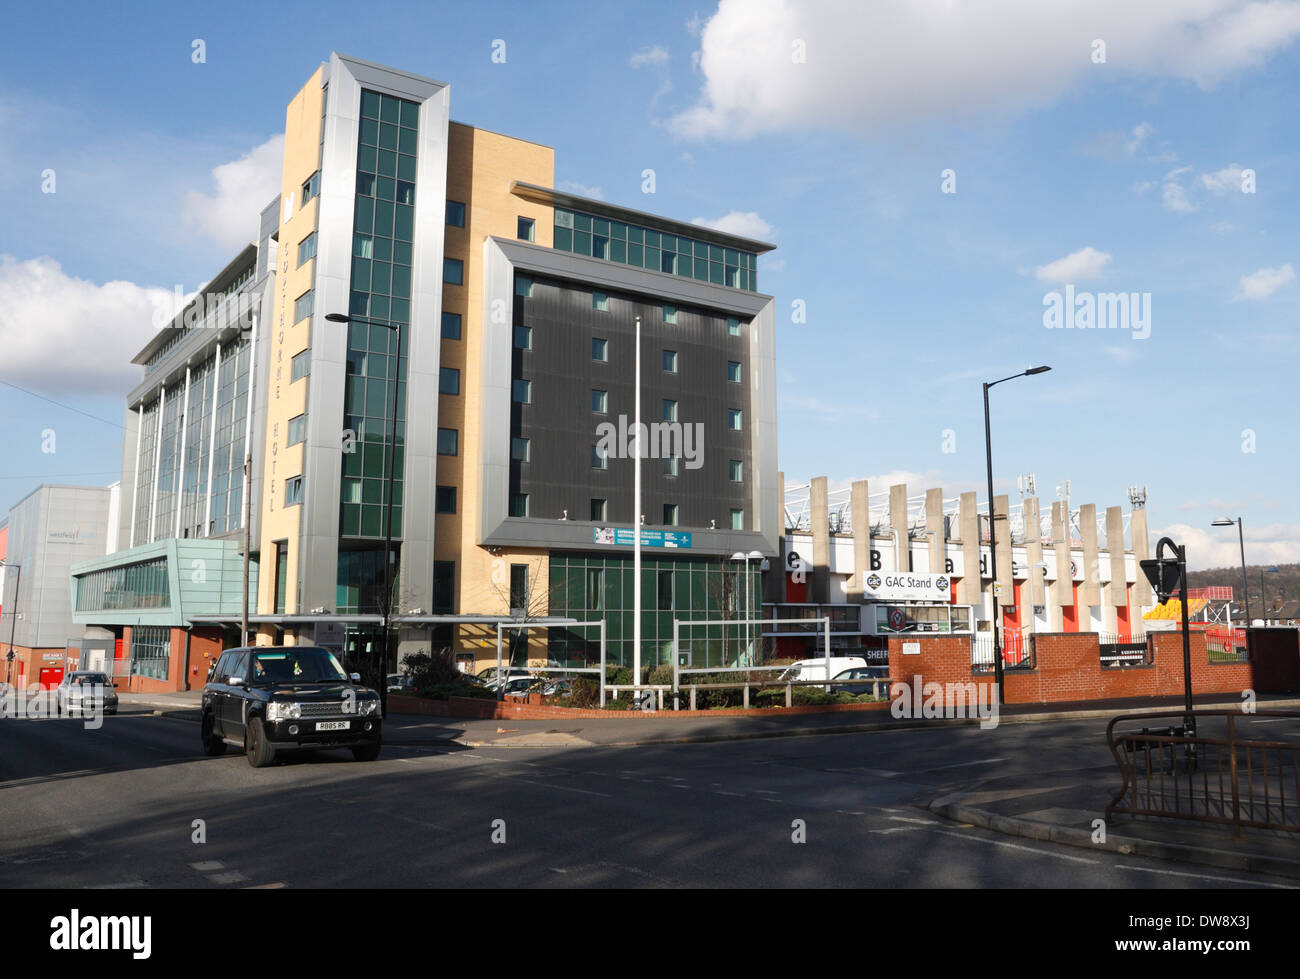 Copthorne hotel and Sheffield United football ground, England Stock Photo